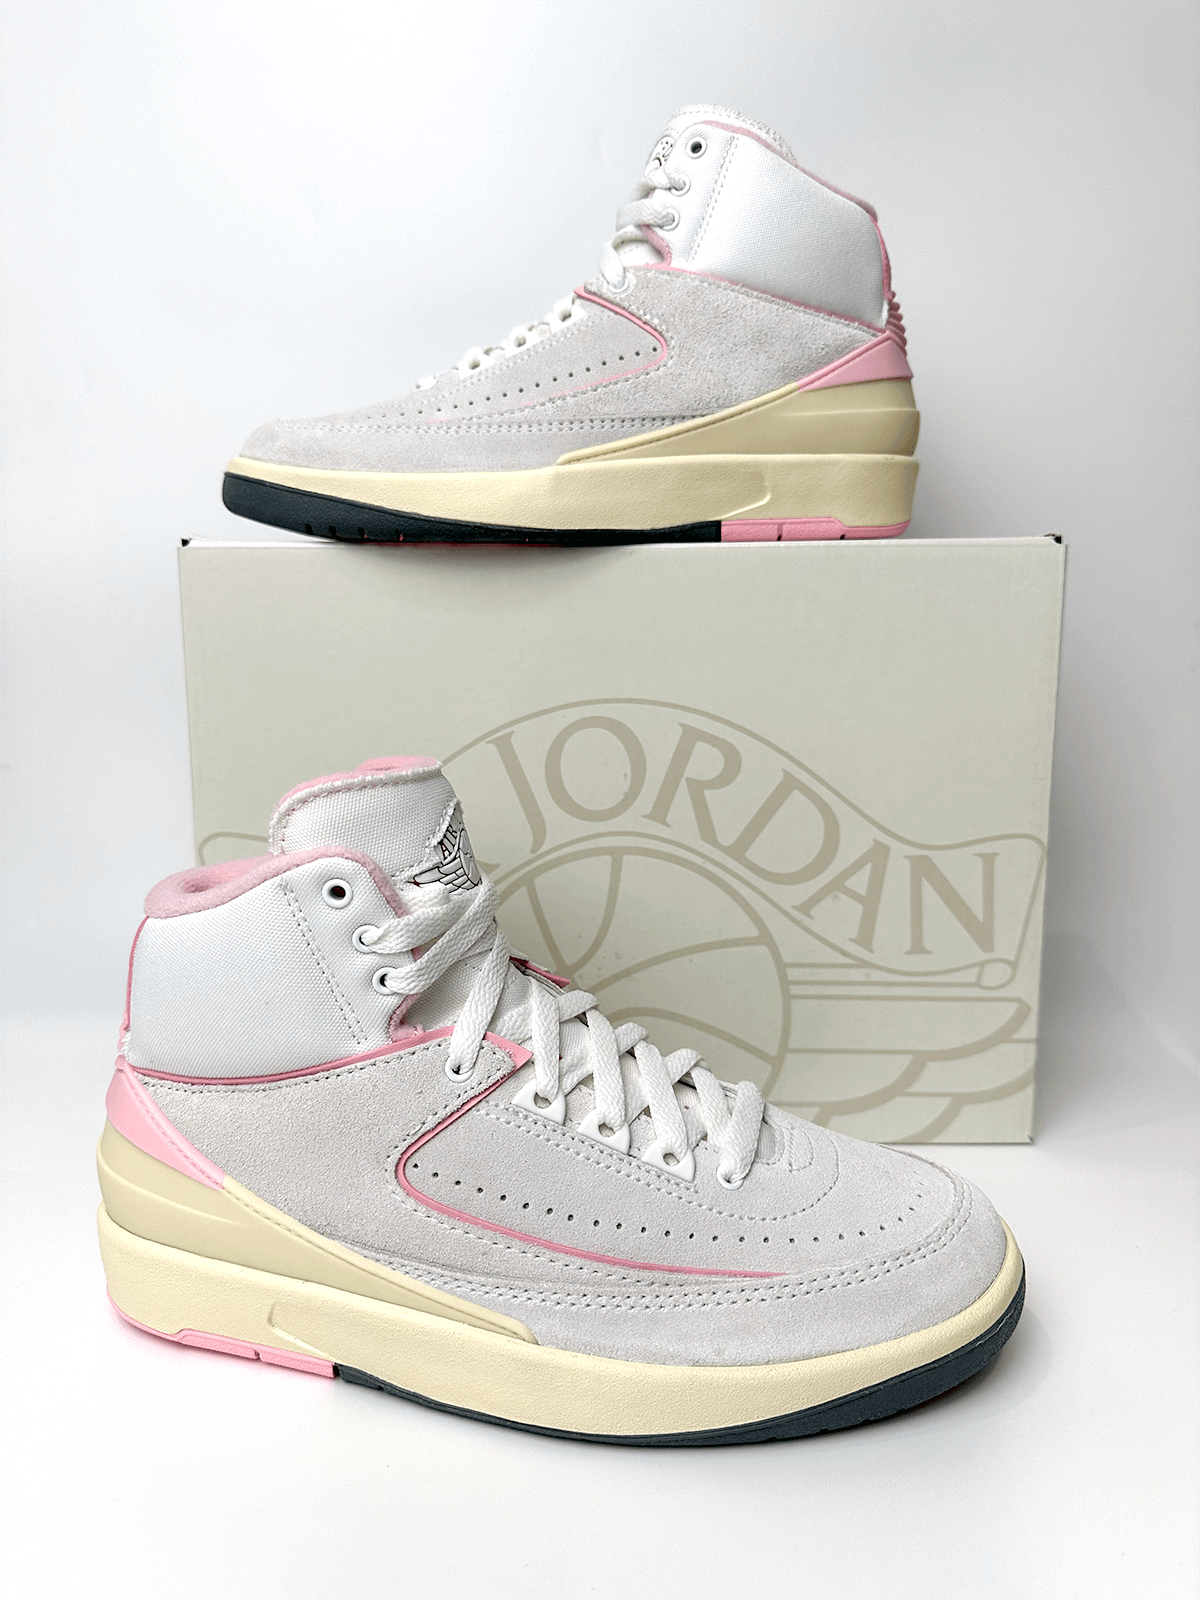 Jordan 2 Soft Pink